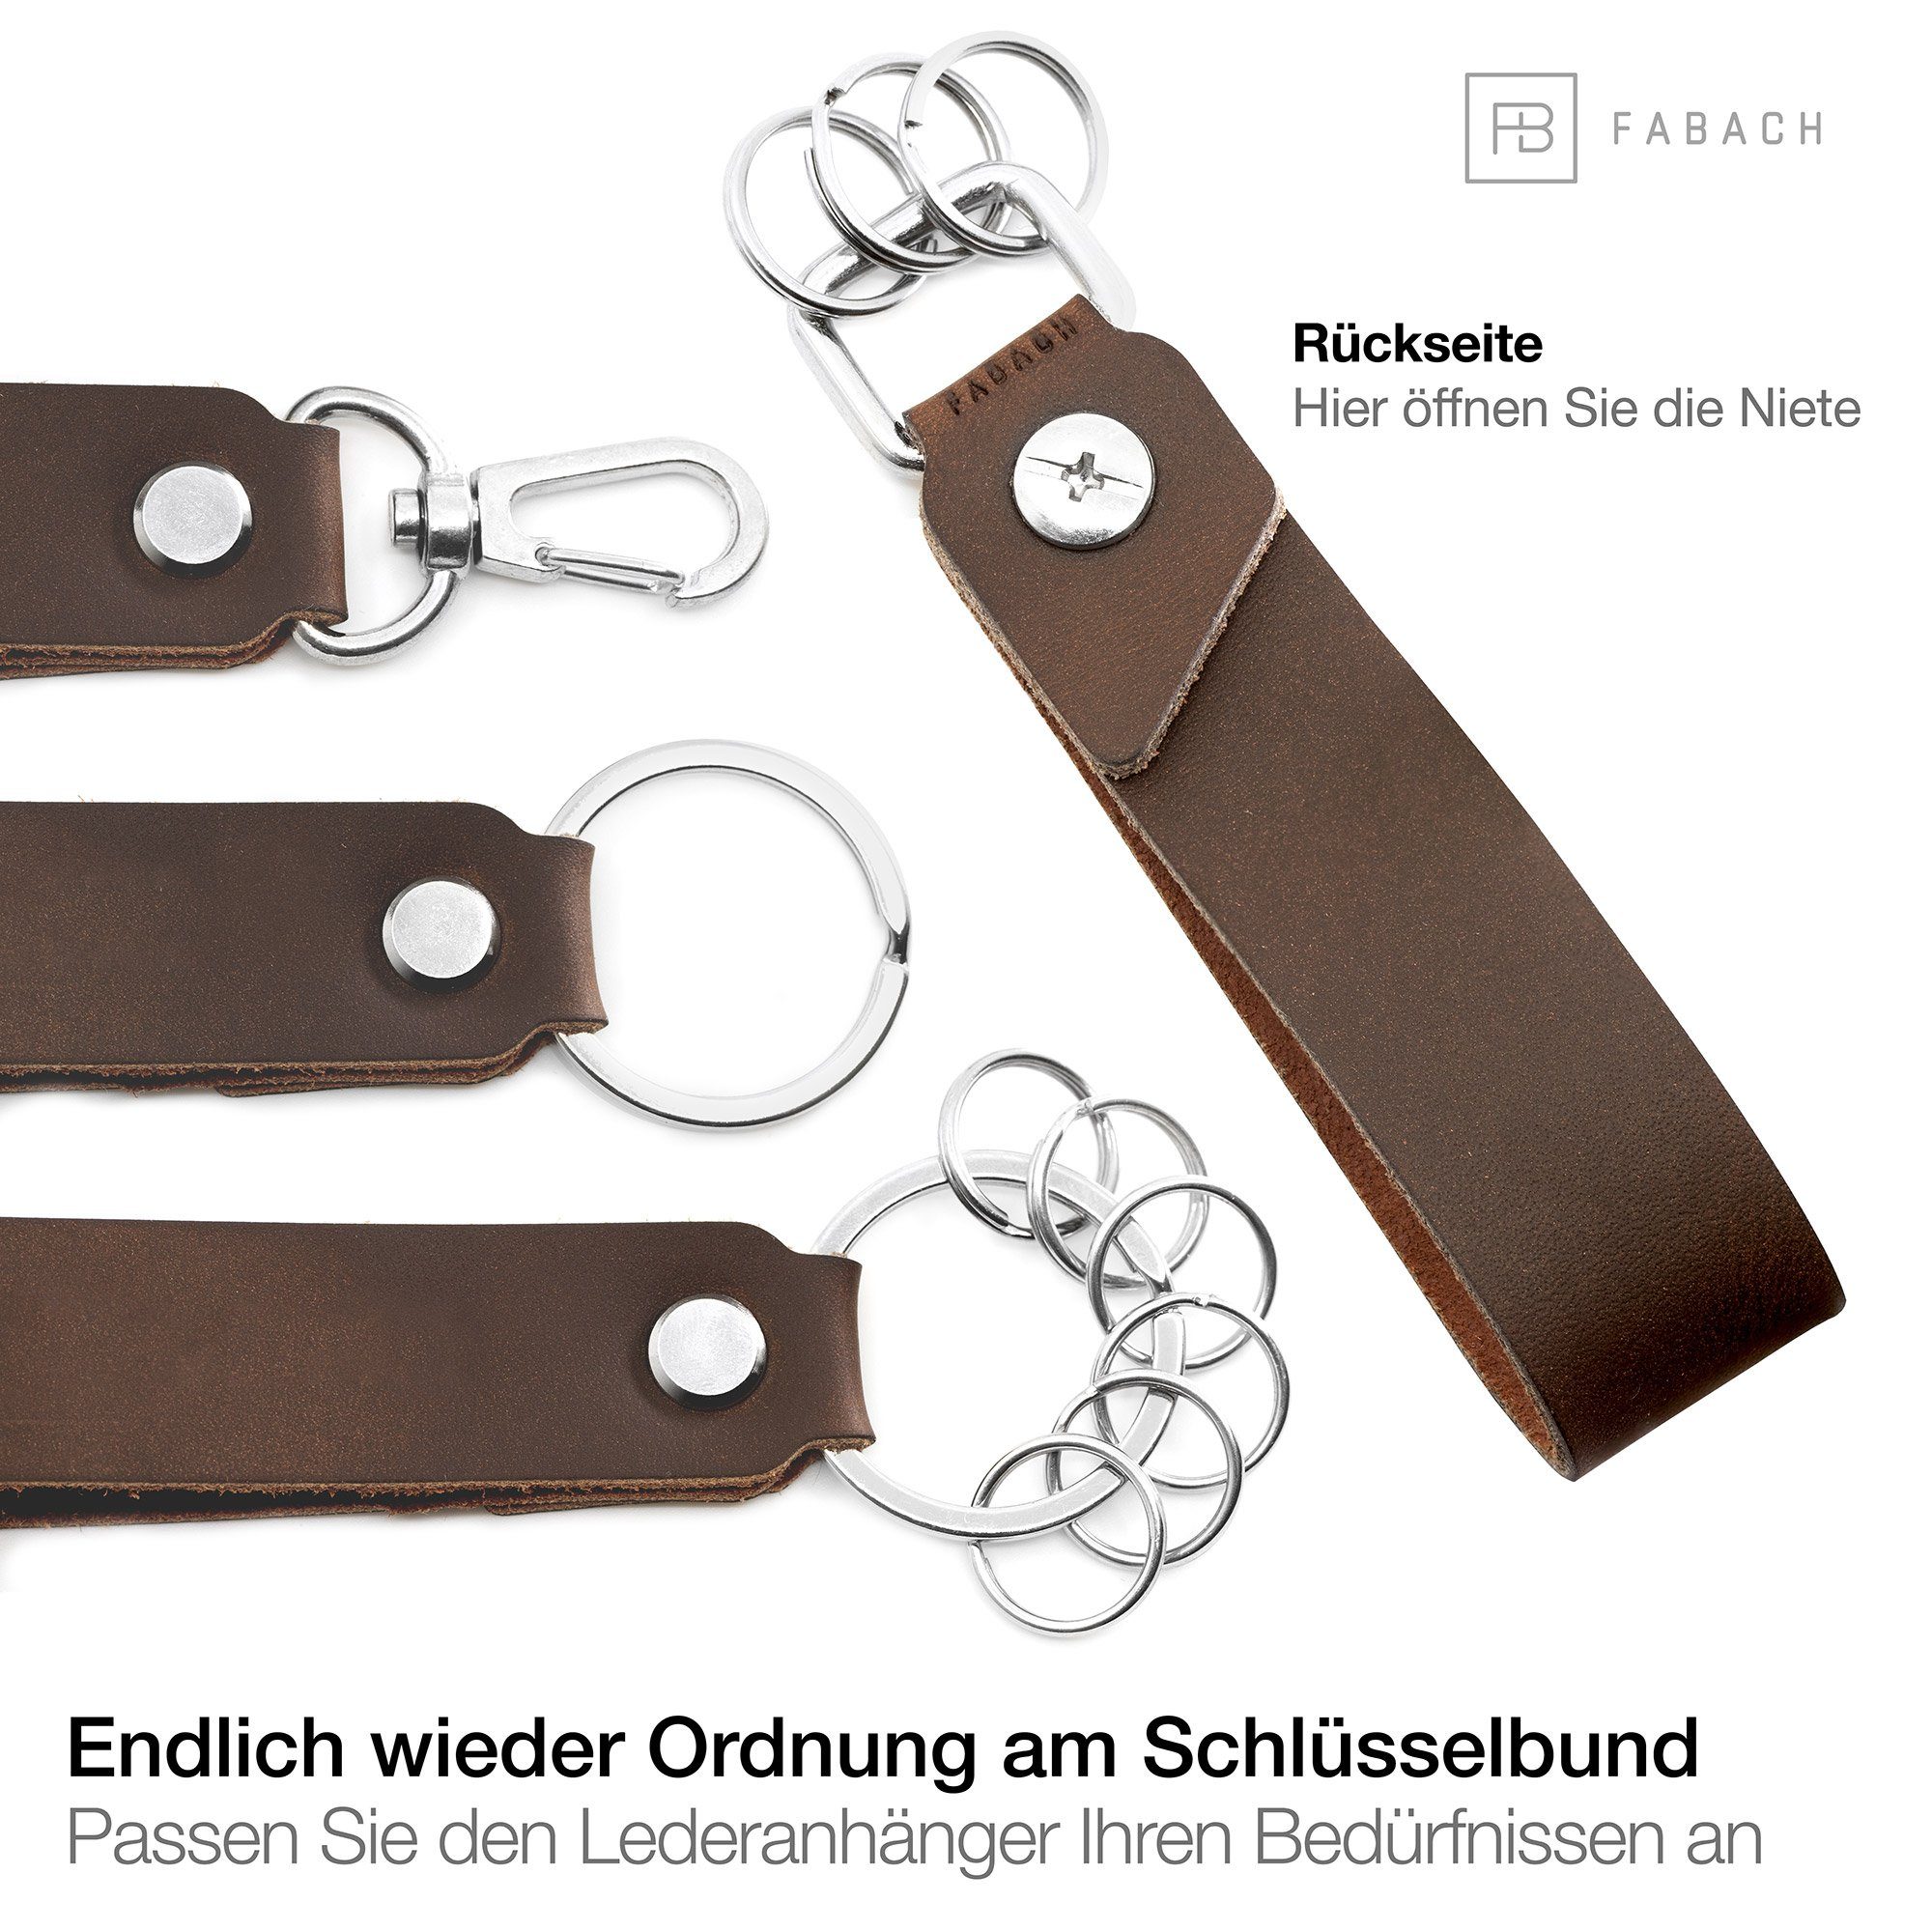 FABACH Anhänger Braun "Fahr wechselbarer vorsichtig" Gravur Schlüsselring Leder - Schlüsselanhänger